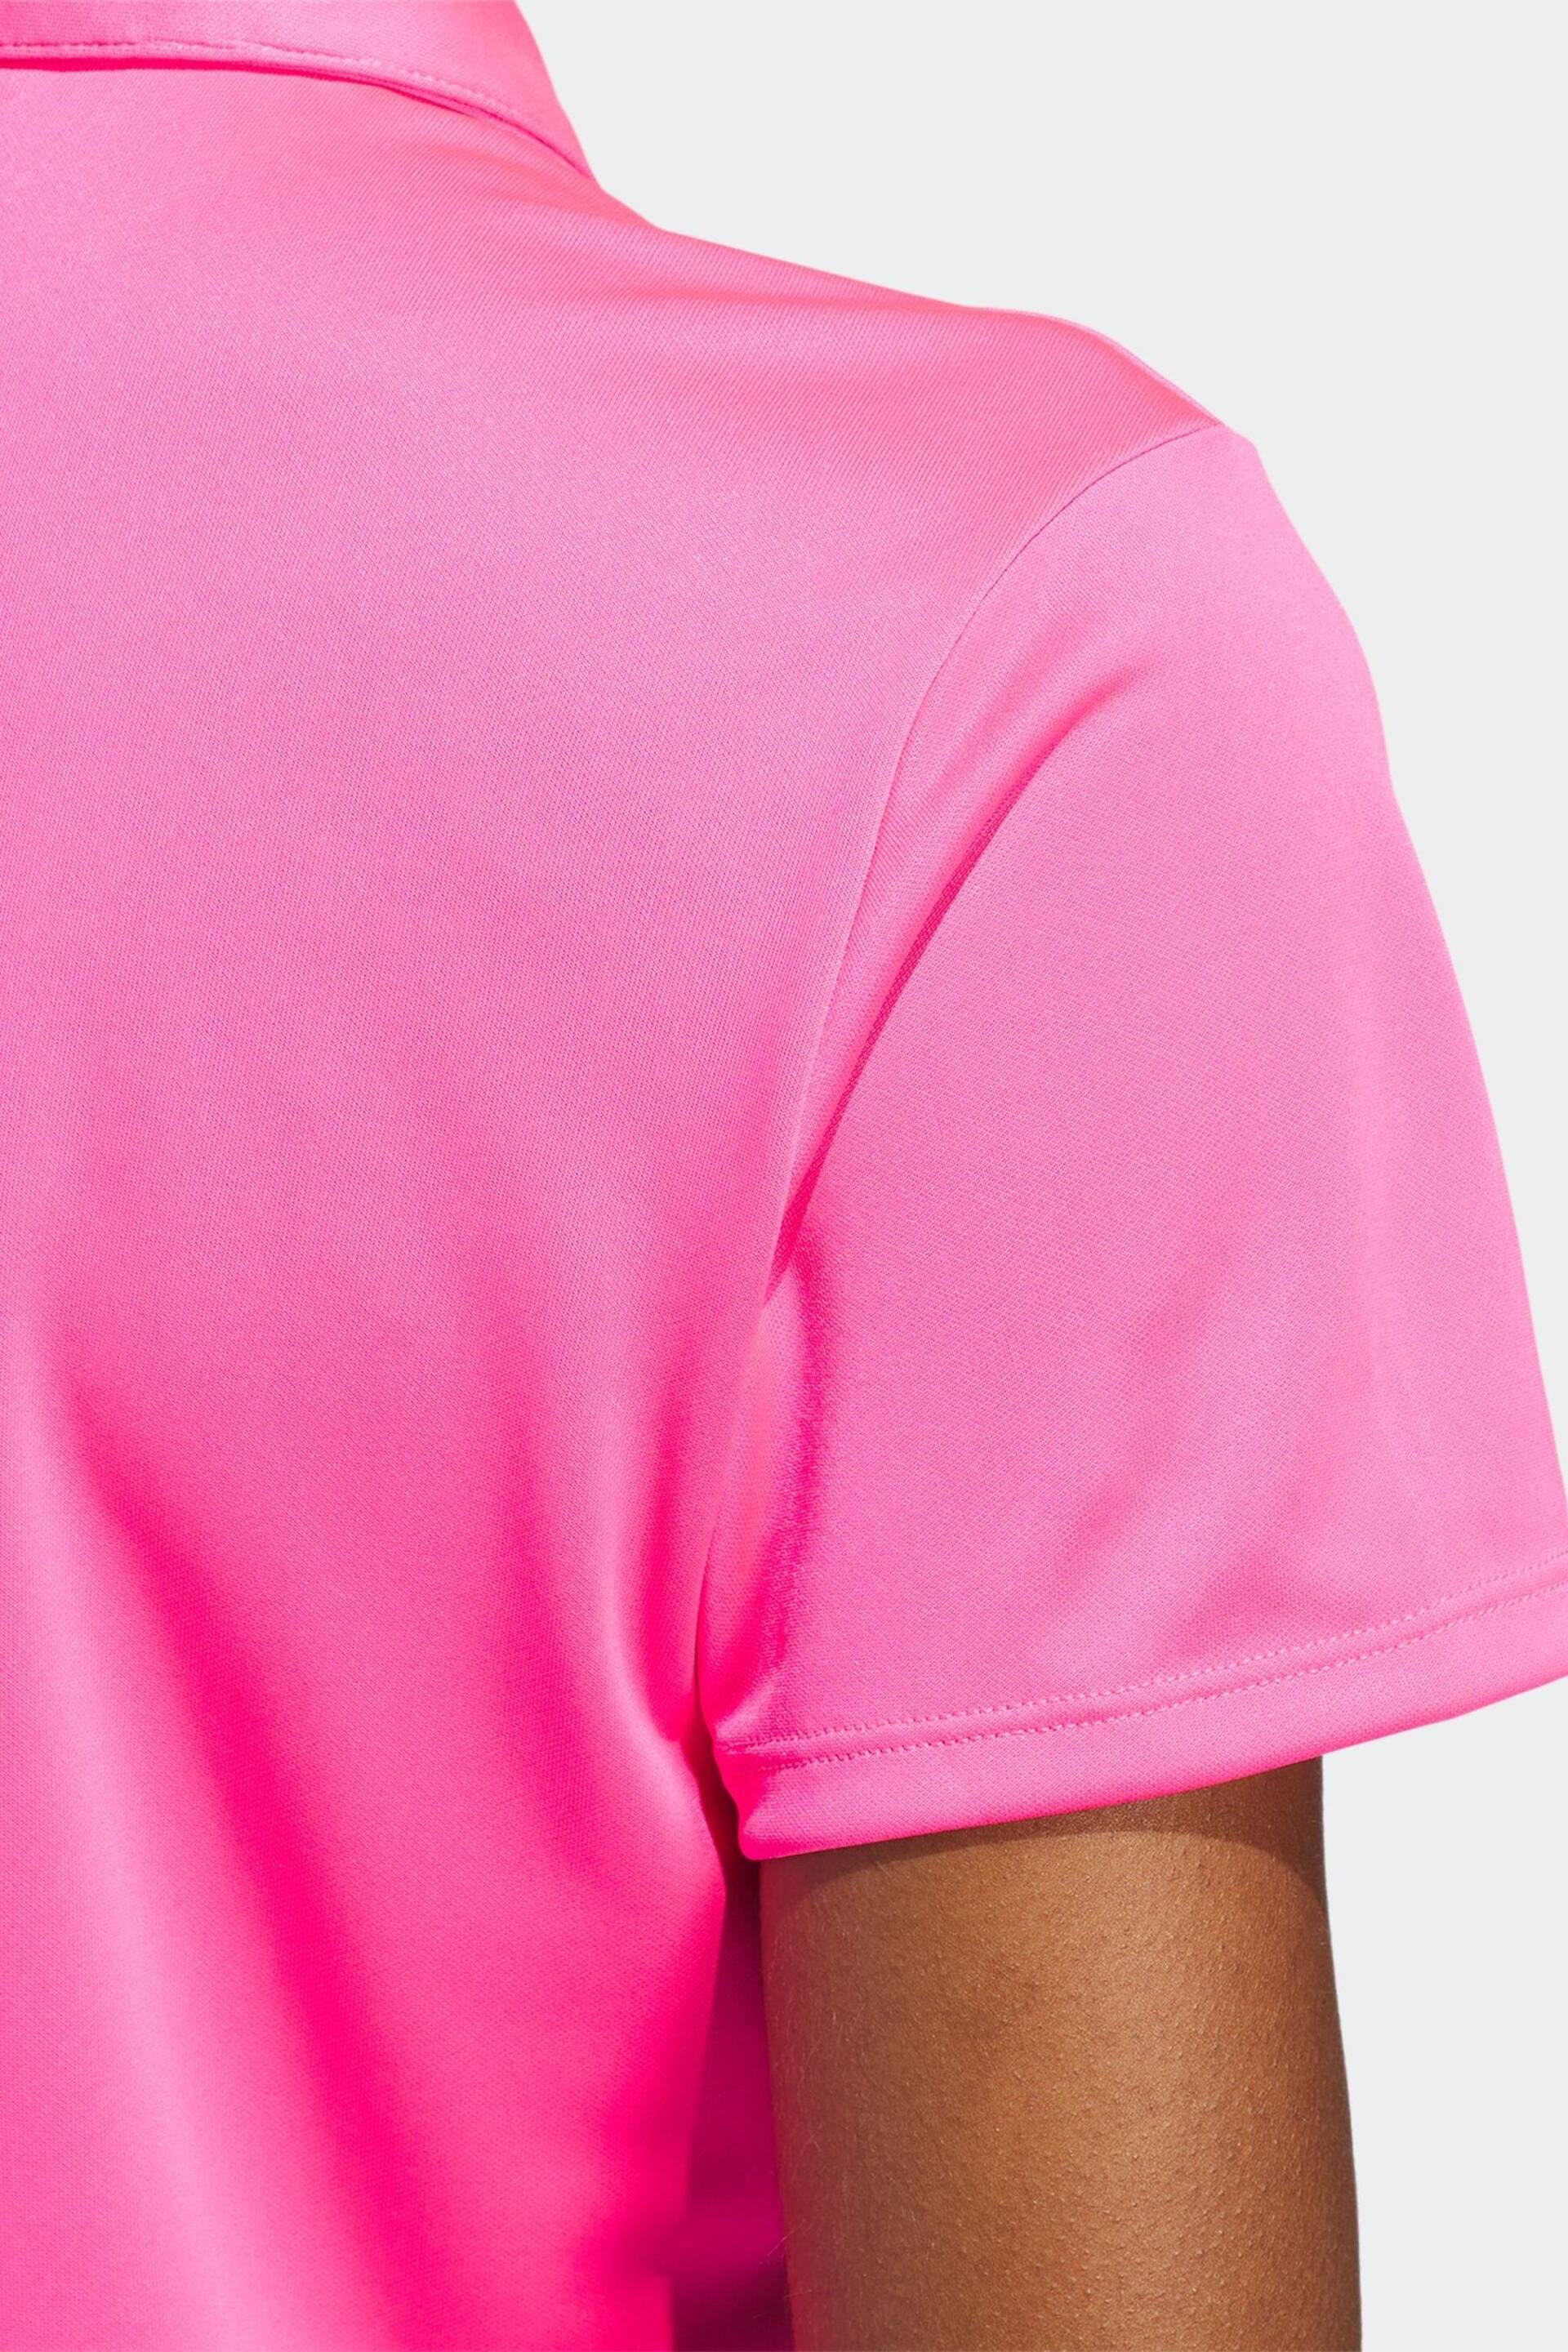 adidas Golf Womens Solid Short Sleeve Polo Shirt - Image 5 of 6